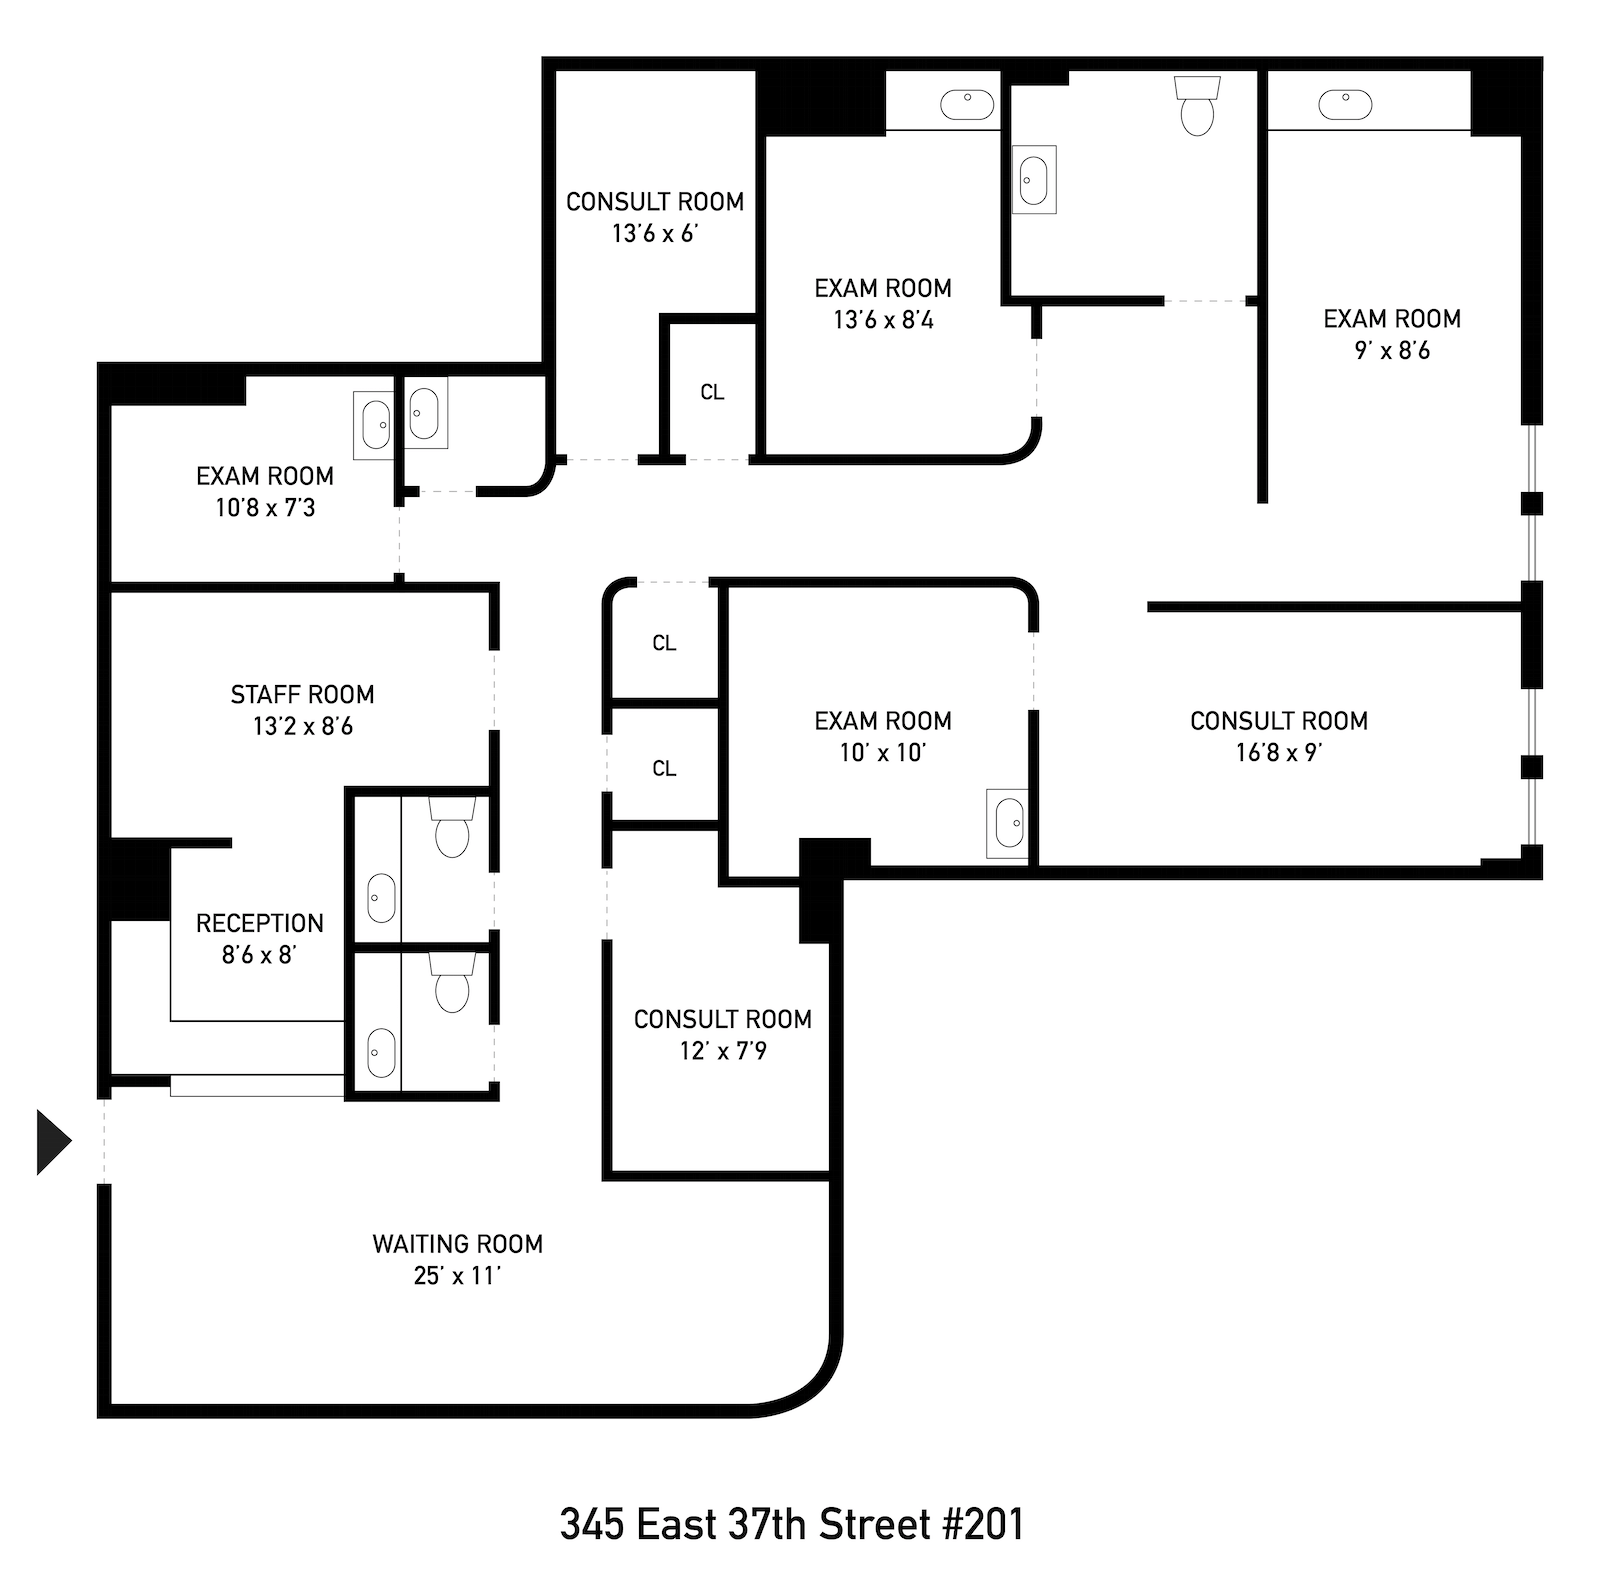 Floorplan for 345 East 37th Street, 201